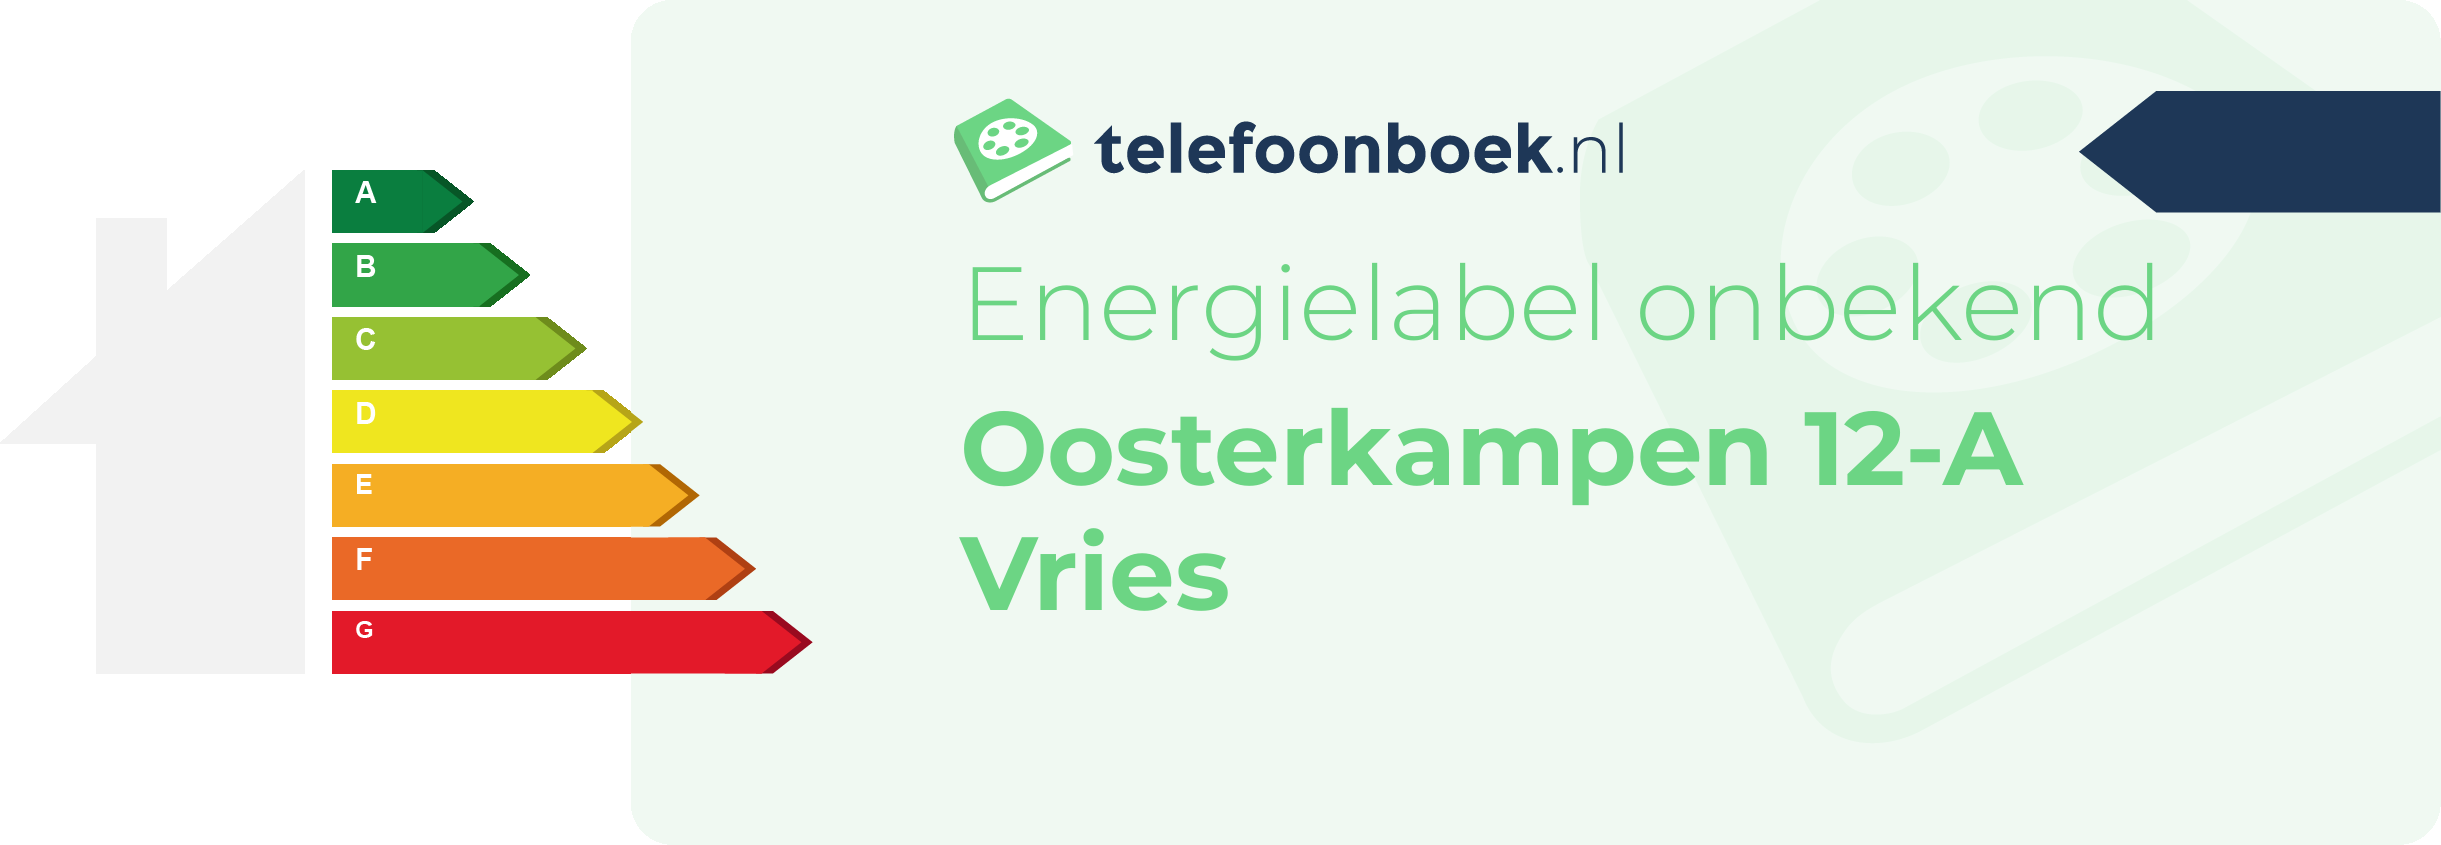 Energielabel Oosterkampen 12-A Vries